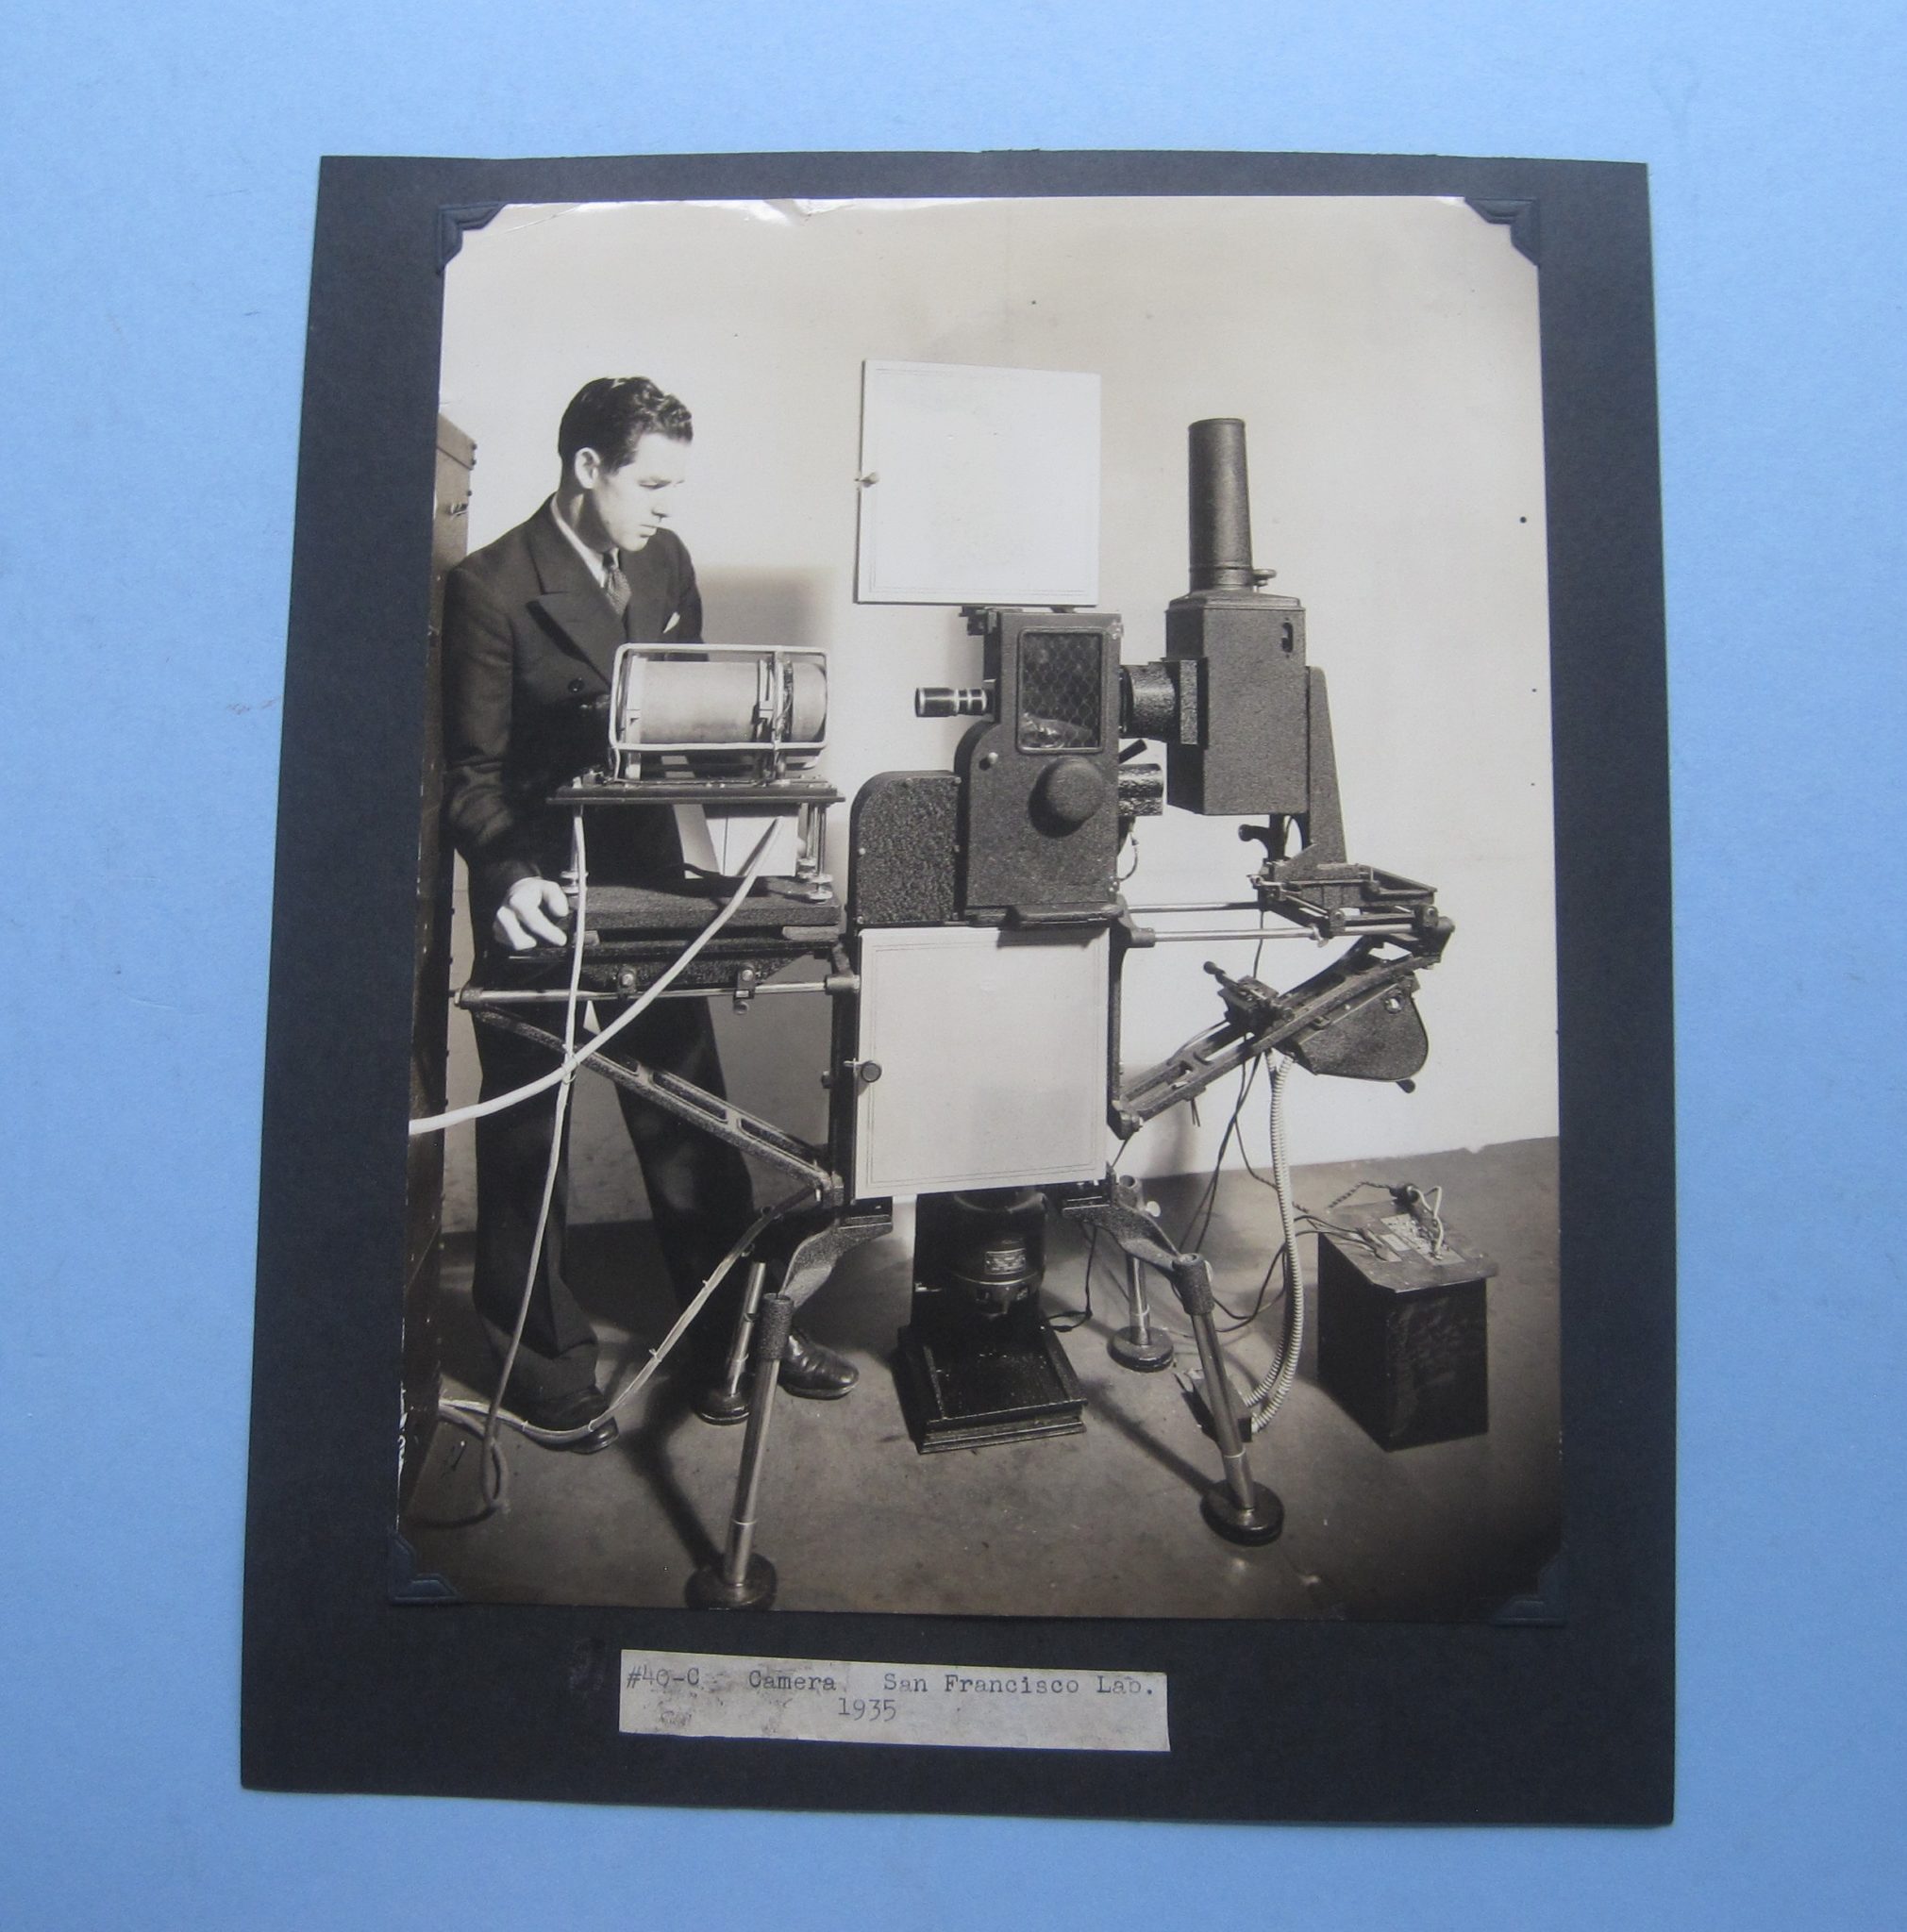 Original Photos Relating to Philo Farnworth’s Pioneering Television Work